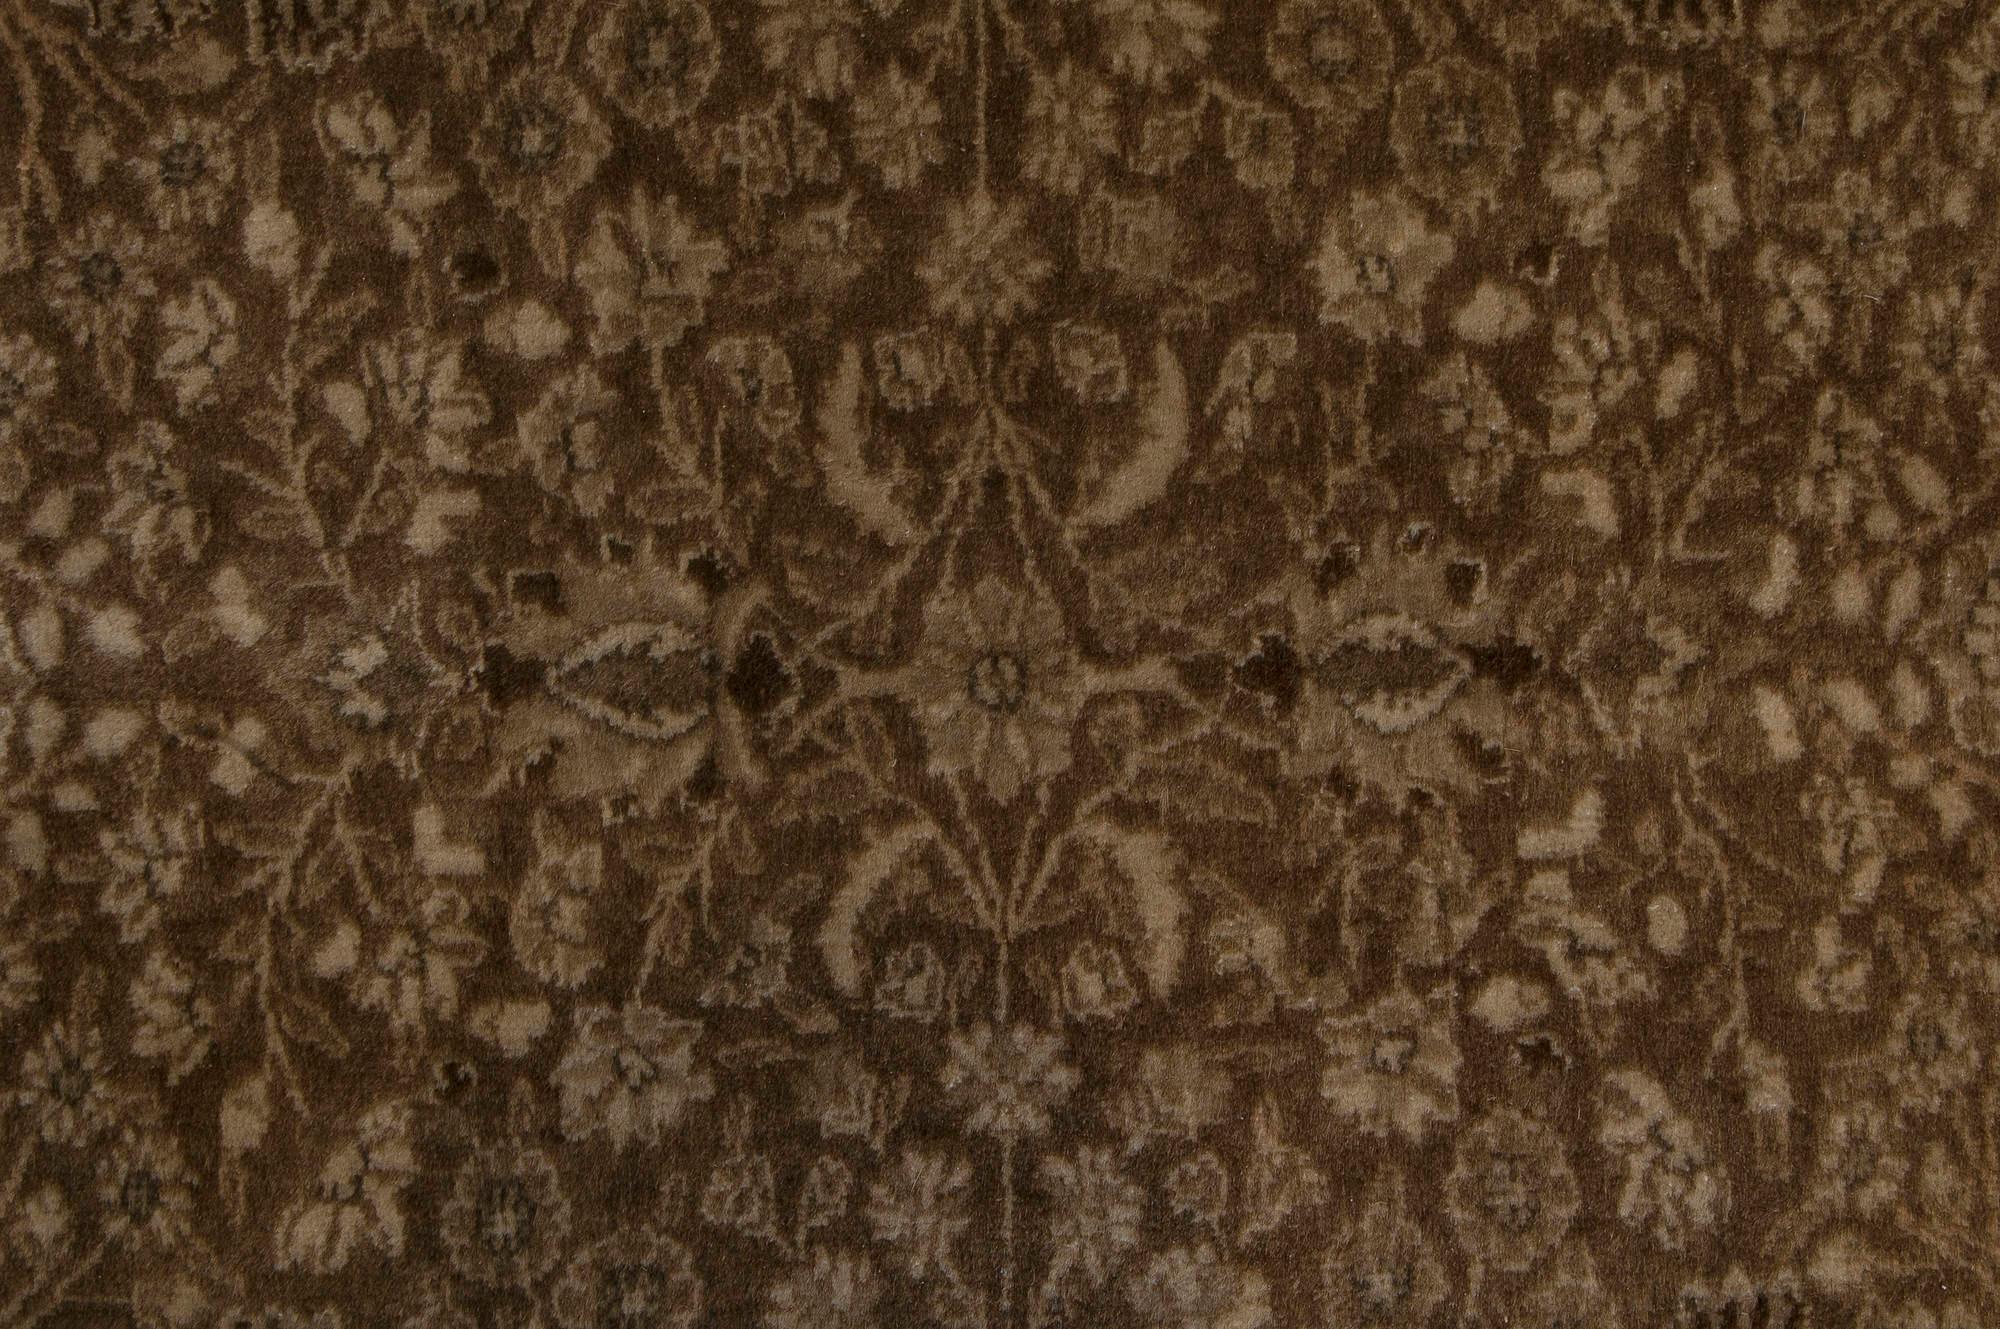 Antique Persian Tabriz botanic brown carpet
Size: 13'4